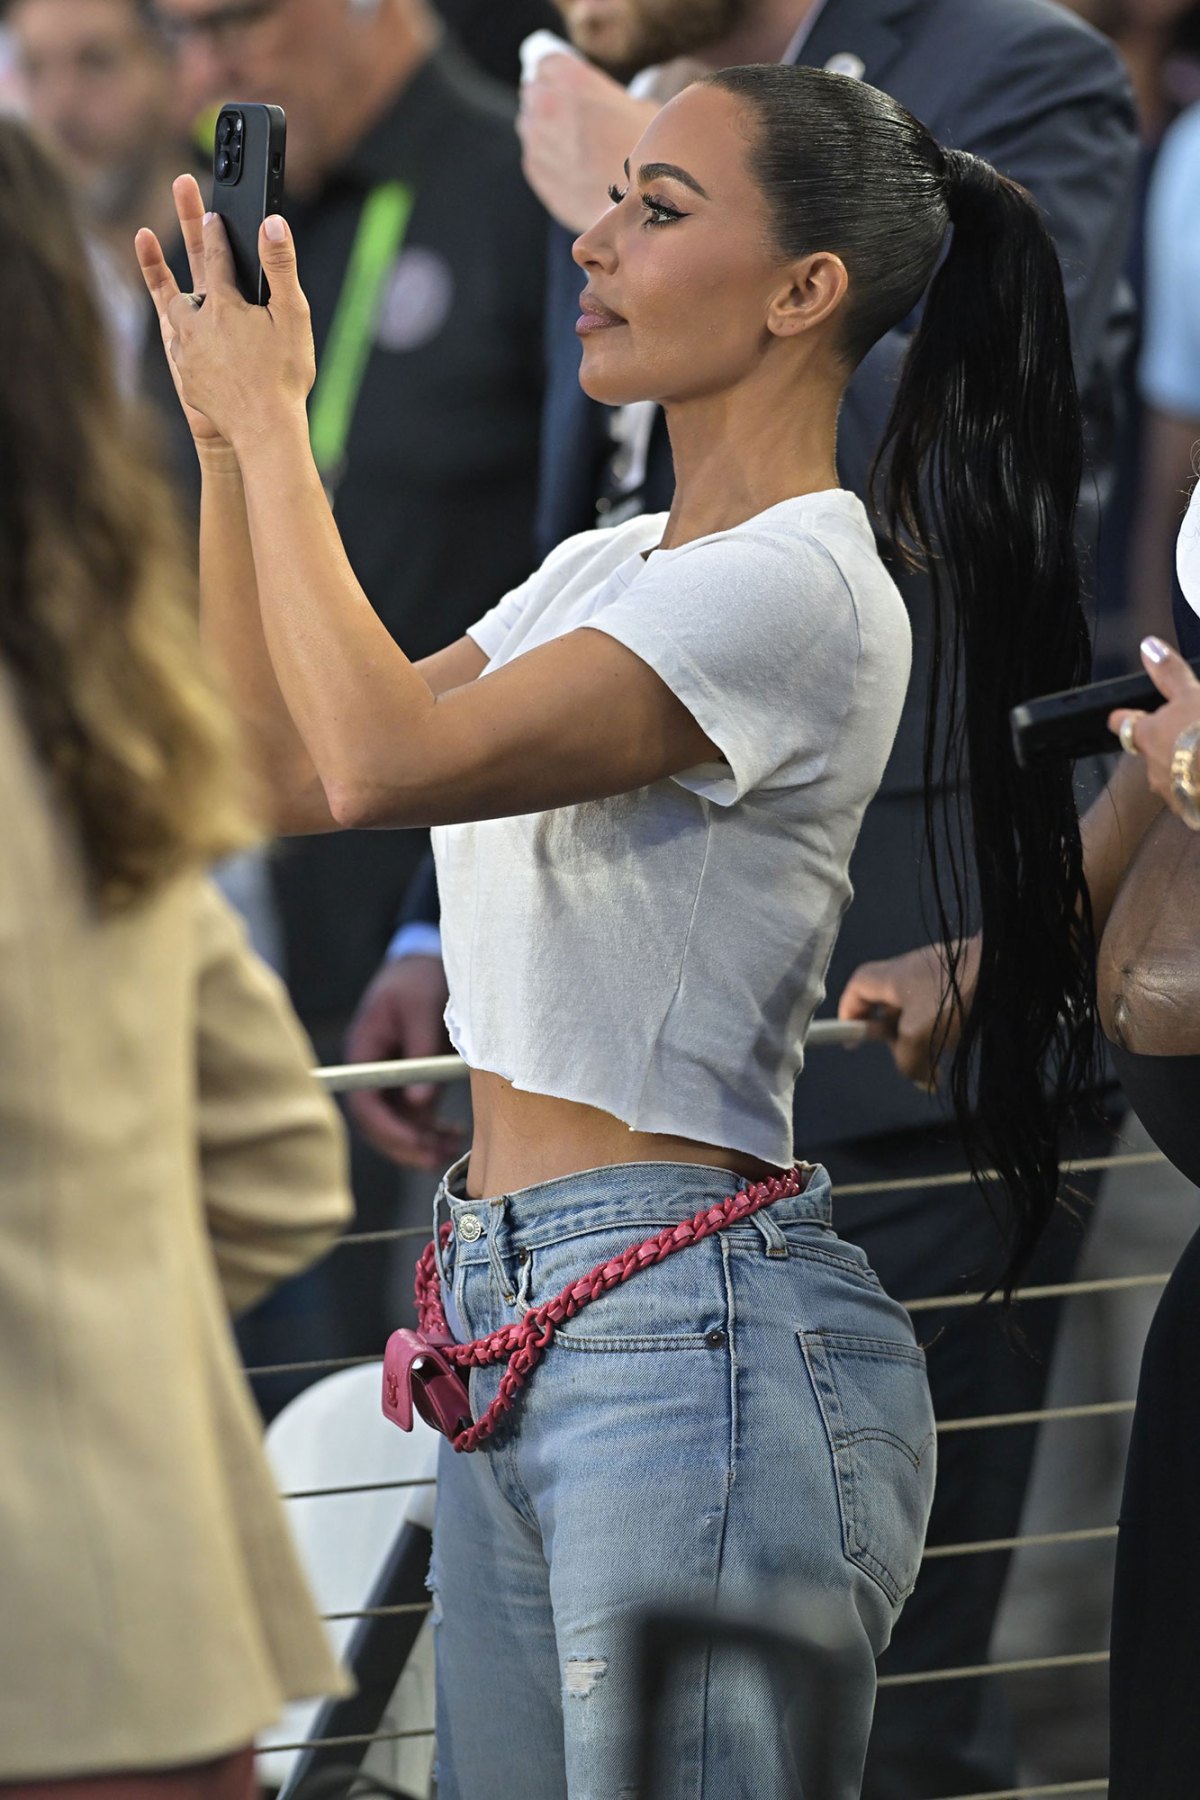 Belt Bag: Celebrities Are Basically Forcing You to Buy a Belt Bag